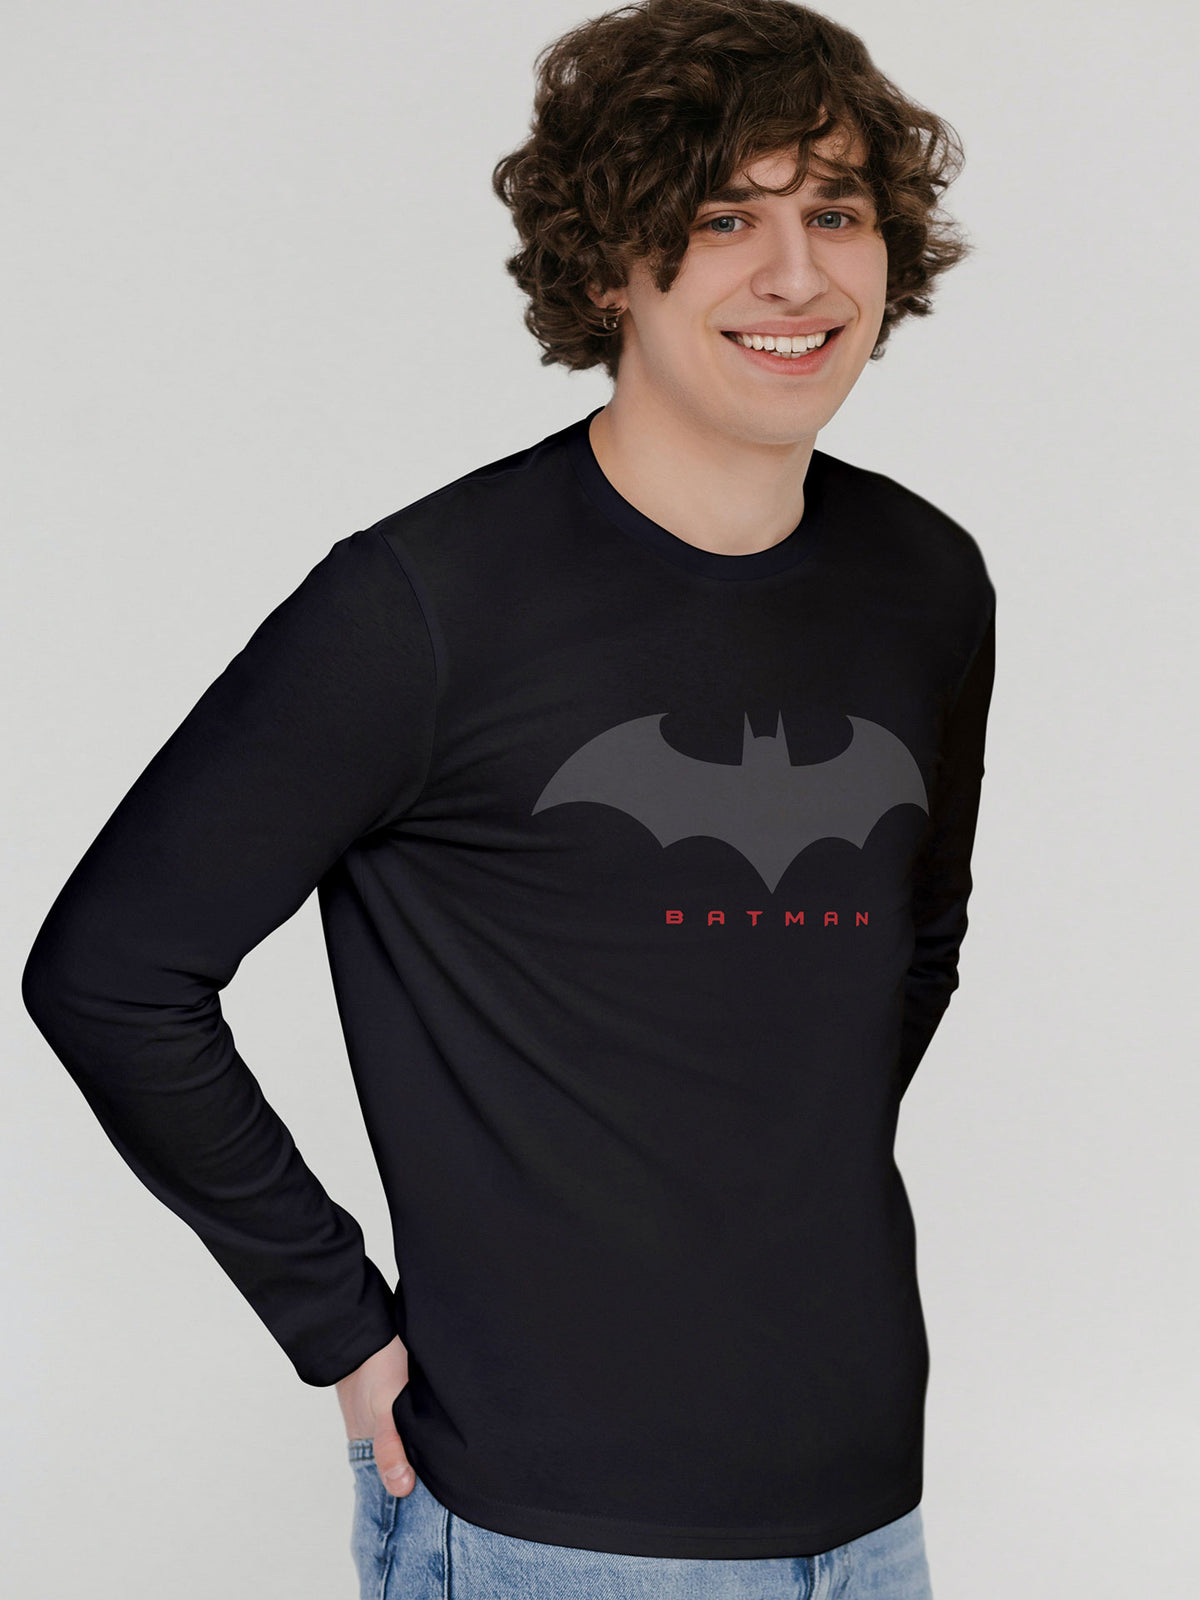 Men's Black Batman Printed Full-Sleeve T-shirt